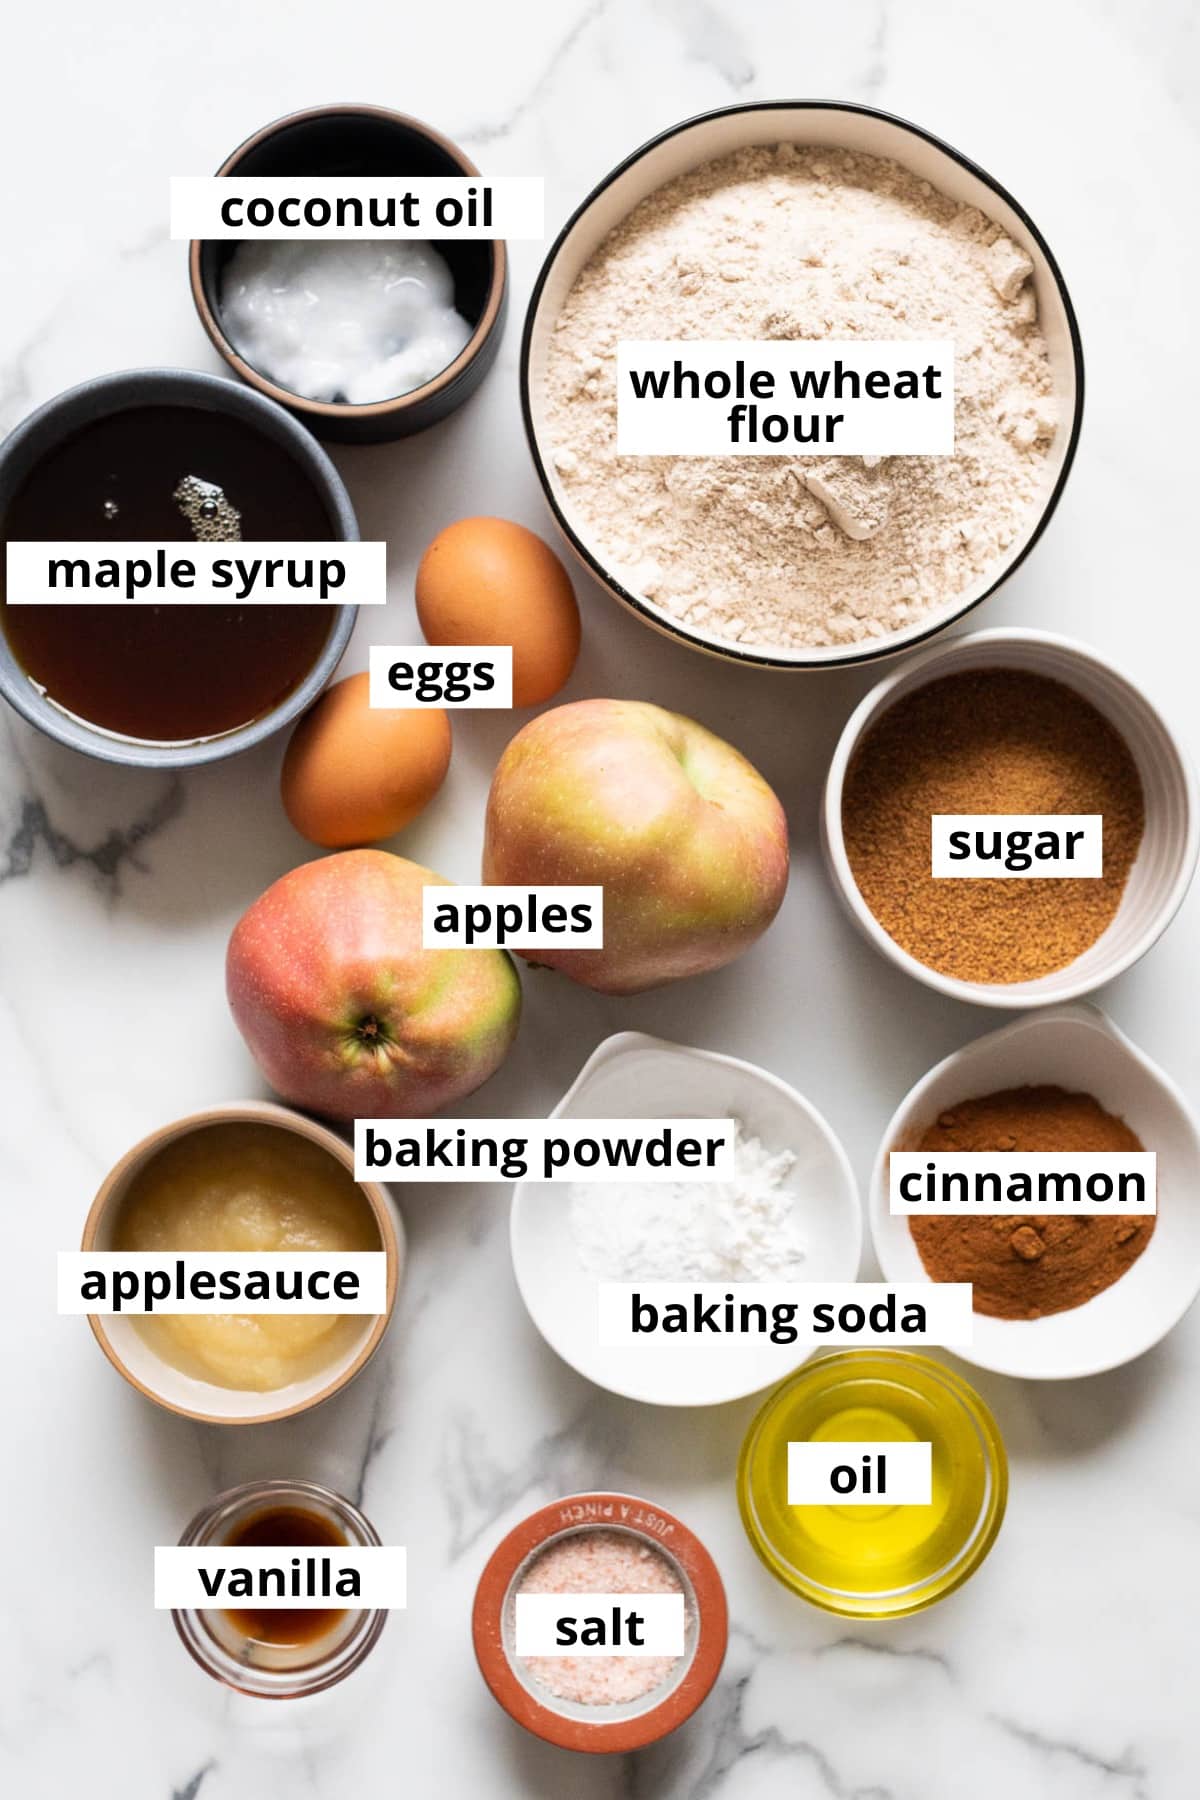 Whole wheat flour, maple syrup, eggs, coconut oil, apples, sugar, applesauce, cinnamon baking powder, baking soda, oil, vanilla, salt.